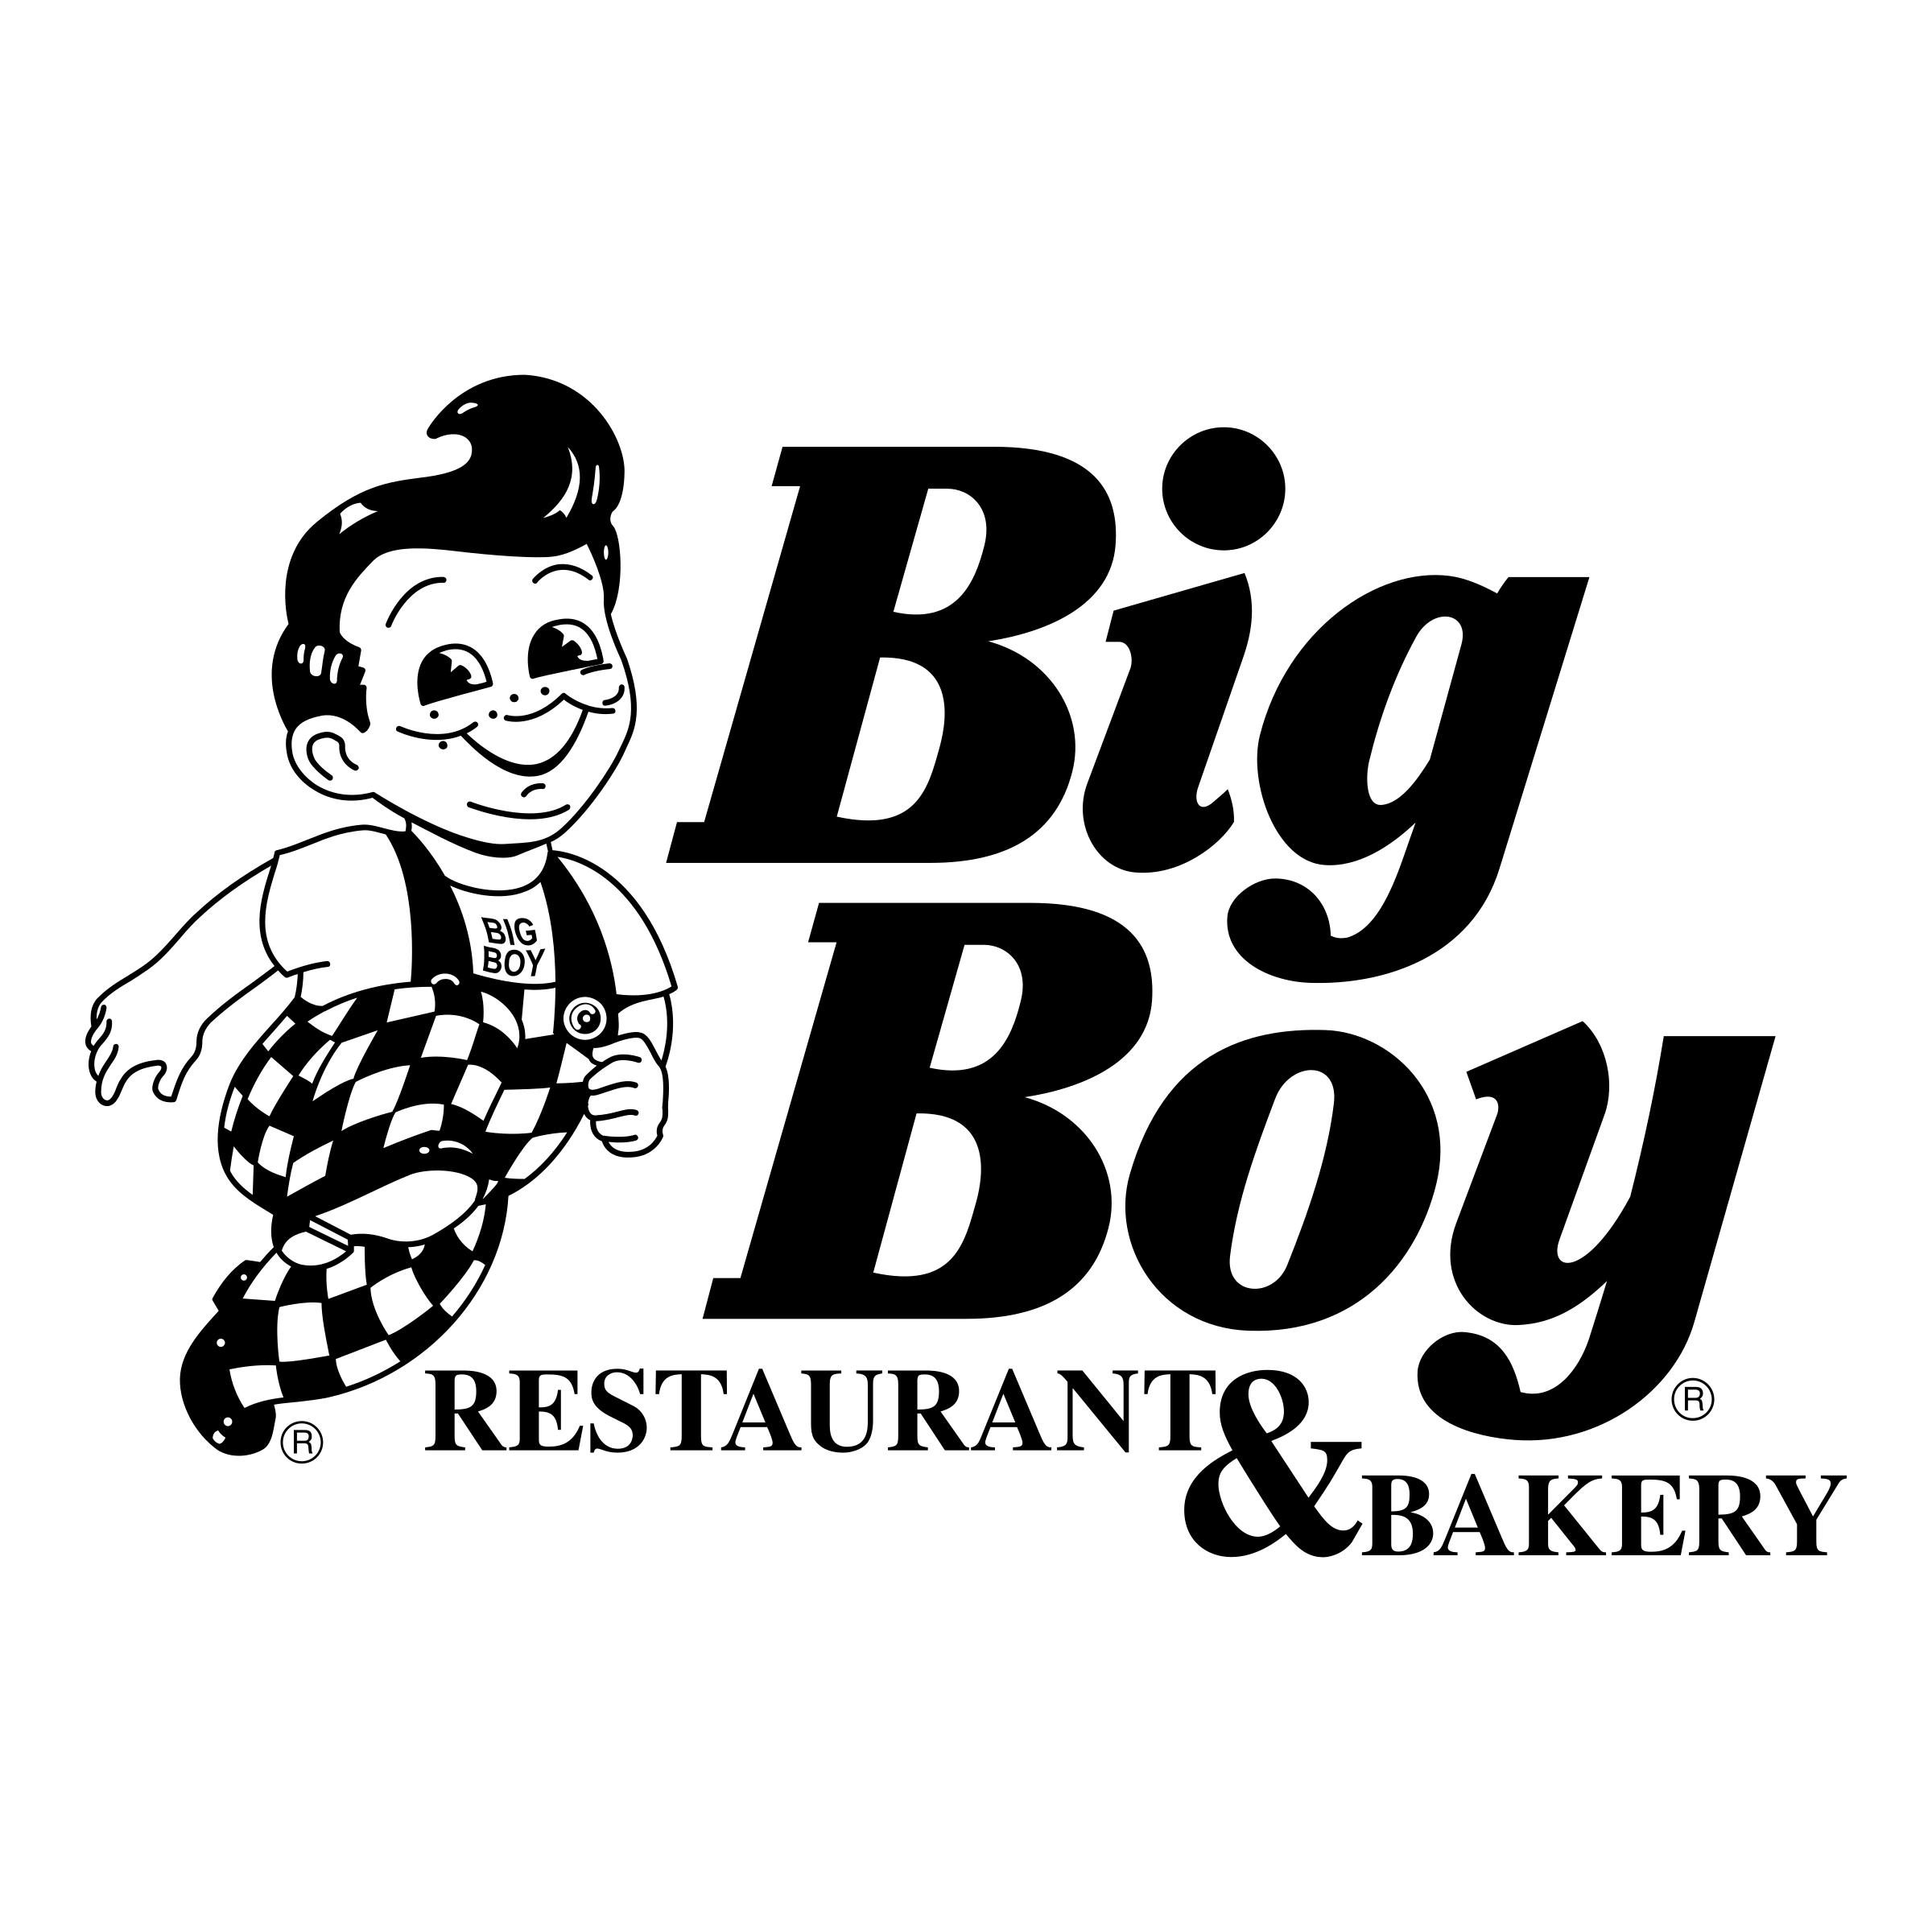 Boy Logo - Big Boy Logo PNG Transparent & SVG Vector